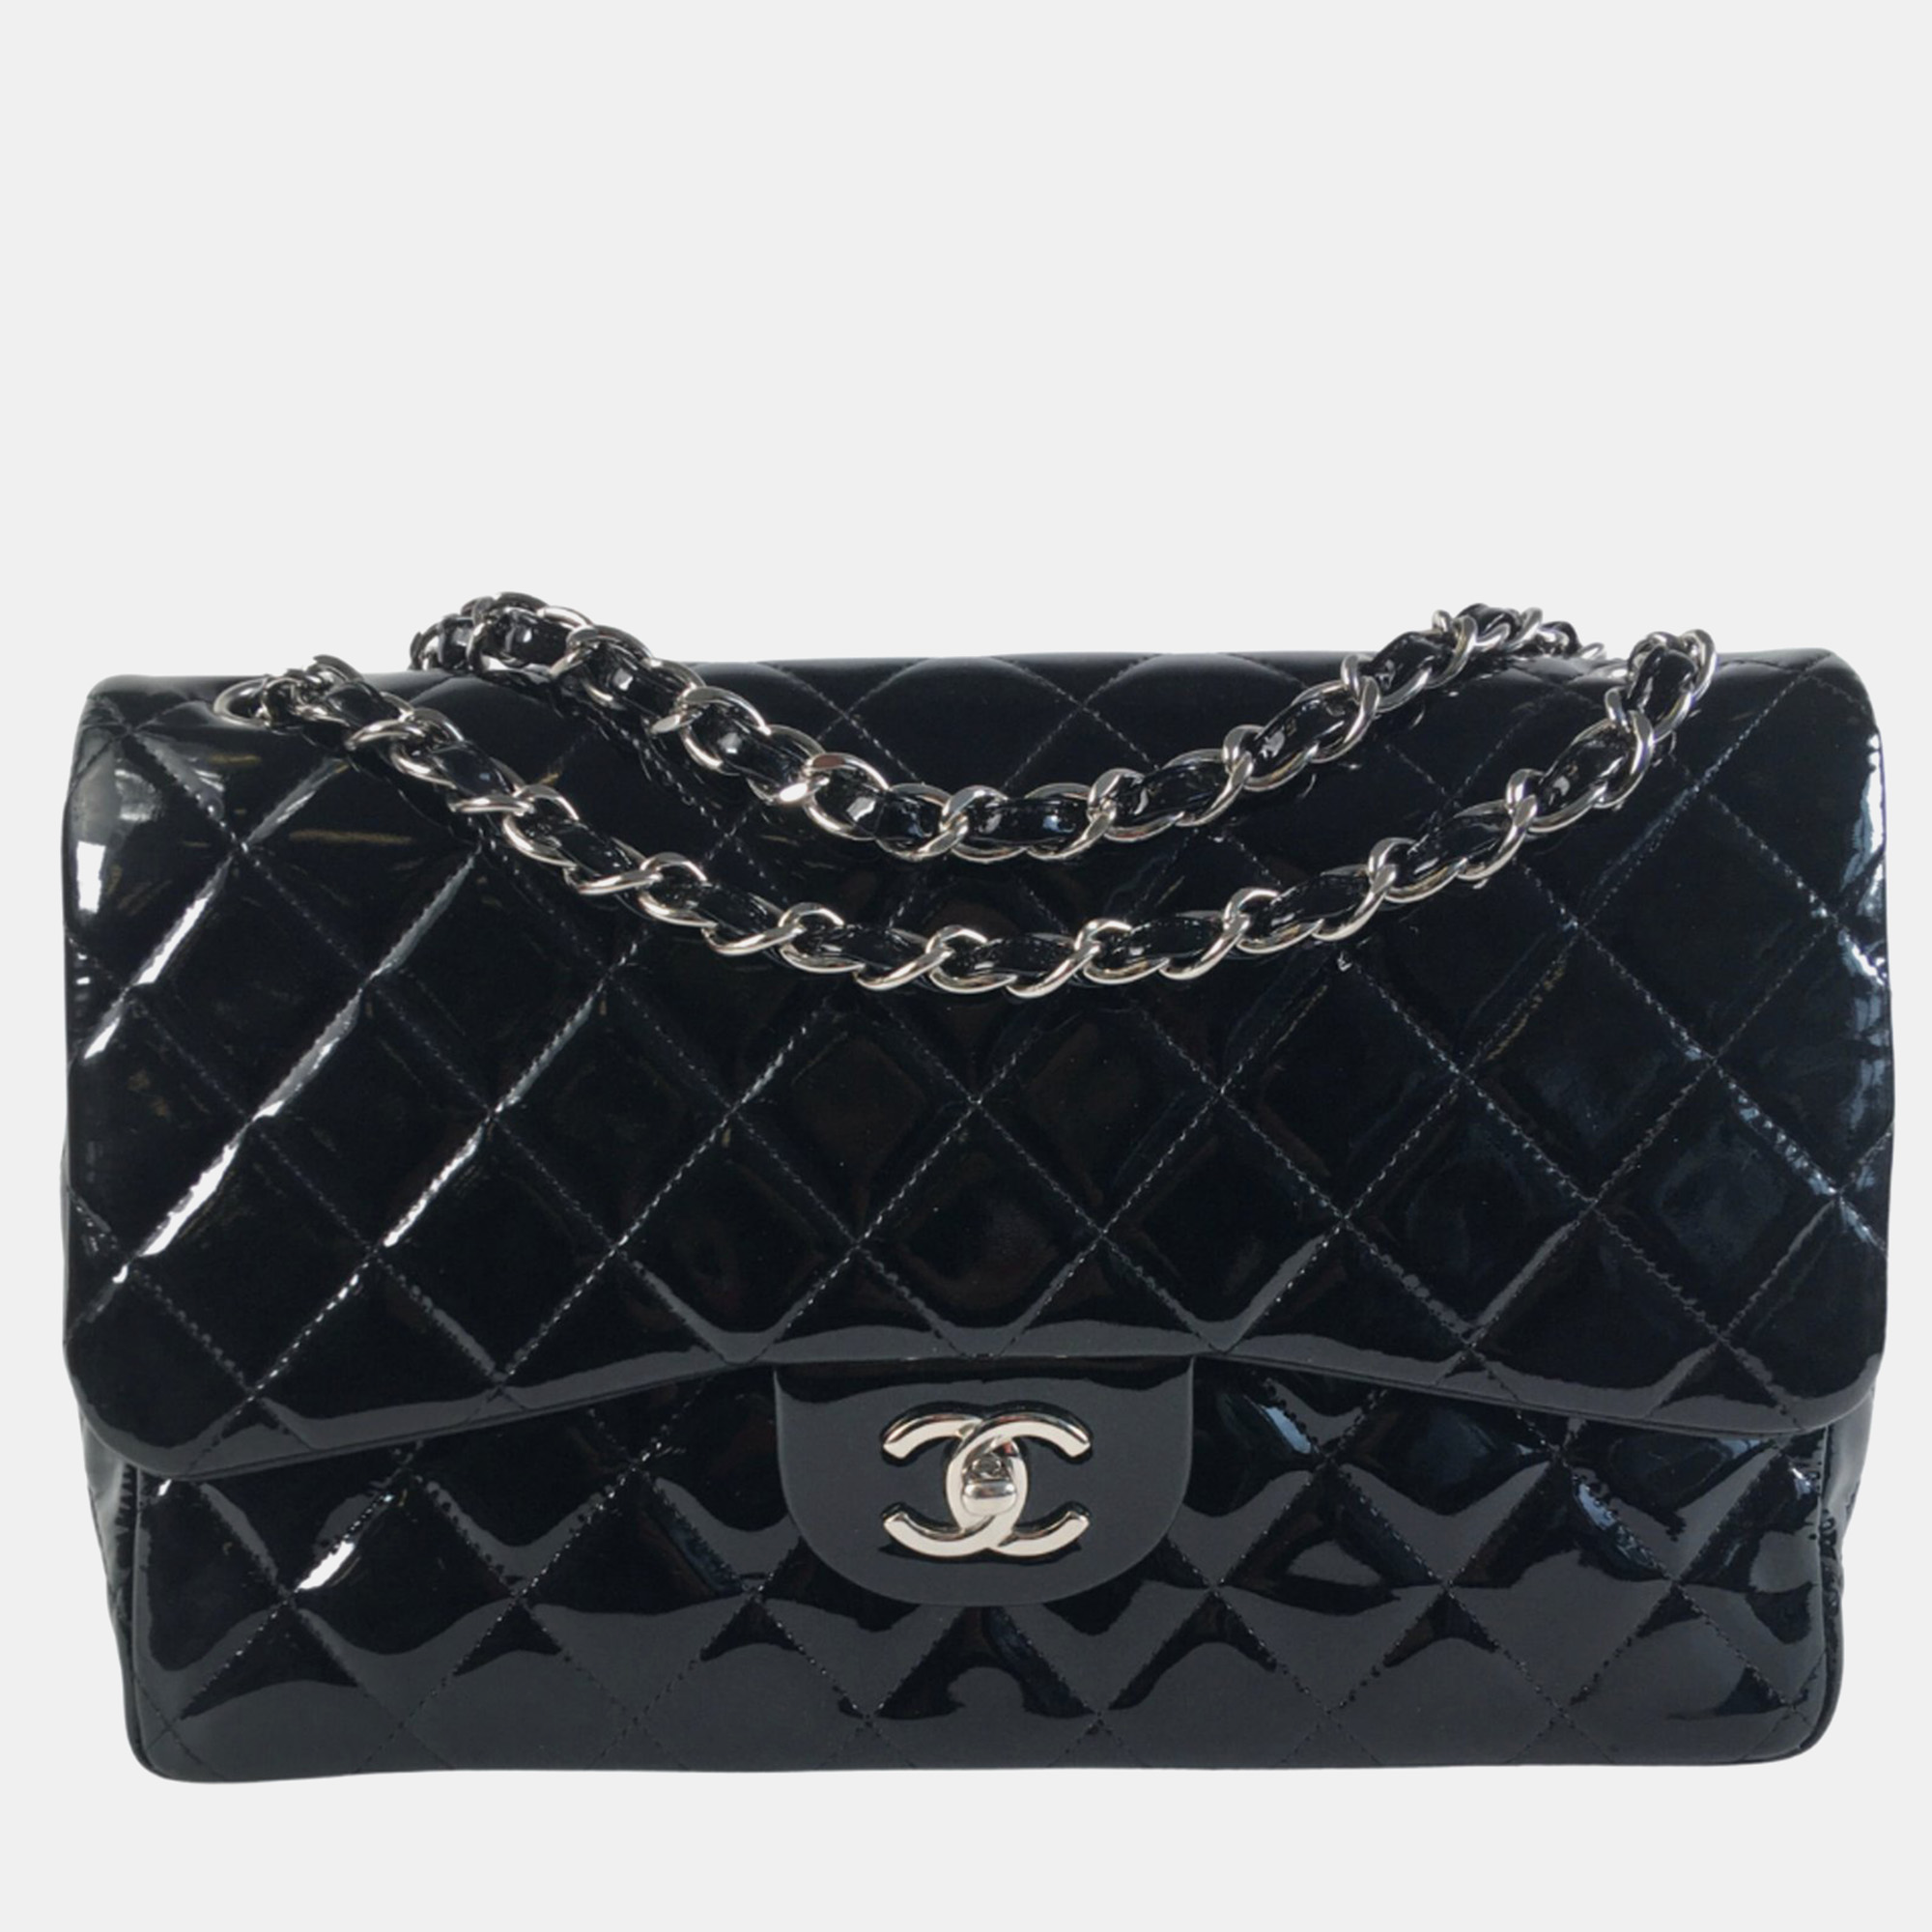 Chanel black patent leather  classic double flap shoulder bags